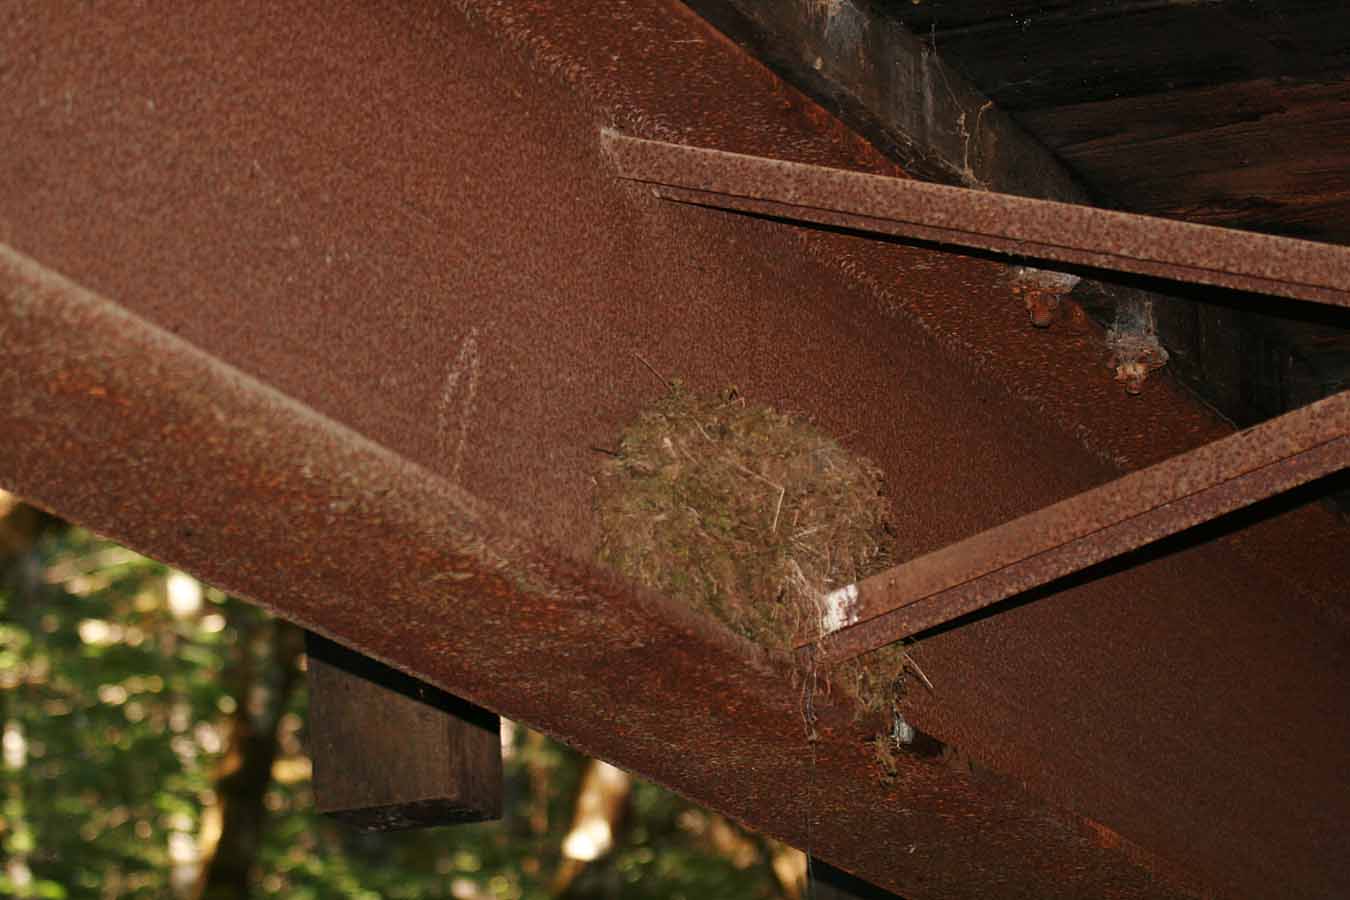 Dipper nest